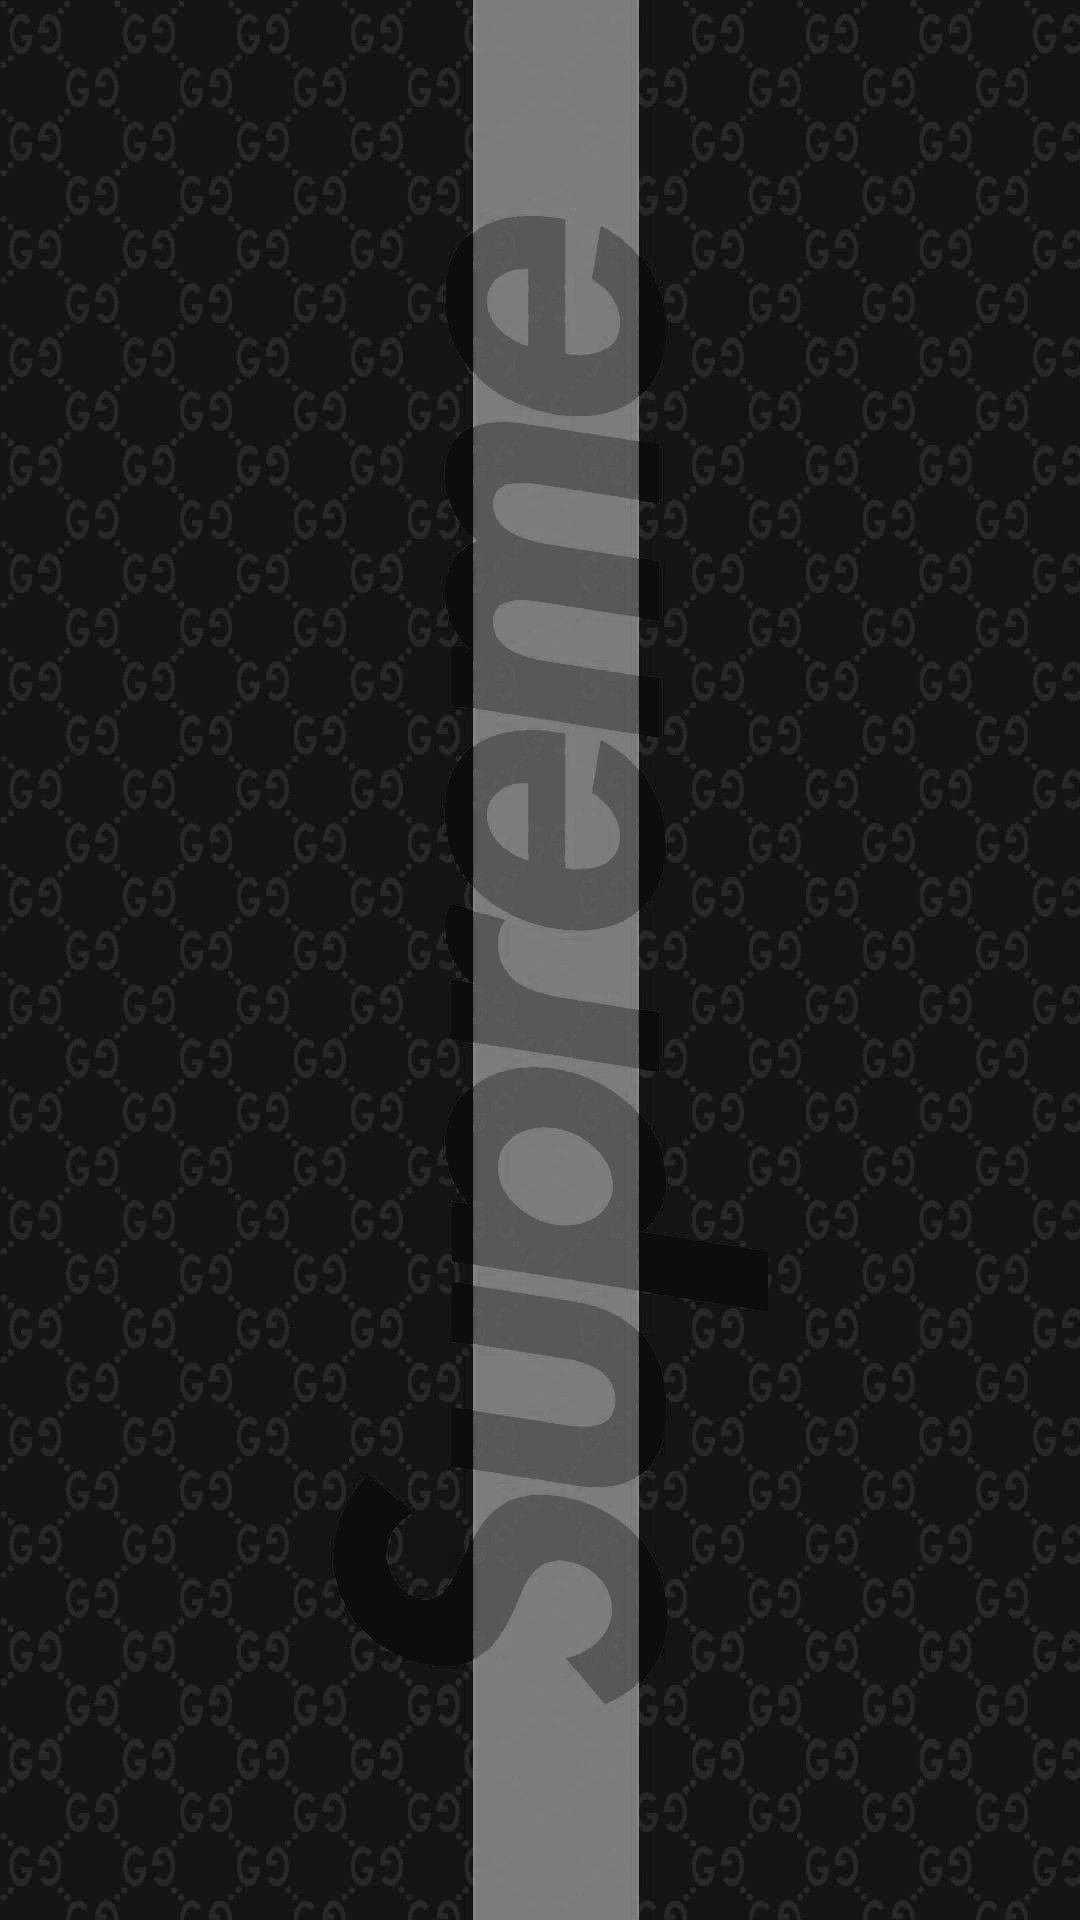 Gucci Logo Wallpapers HD  PixelsTalkNet